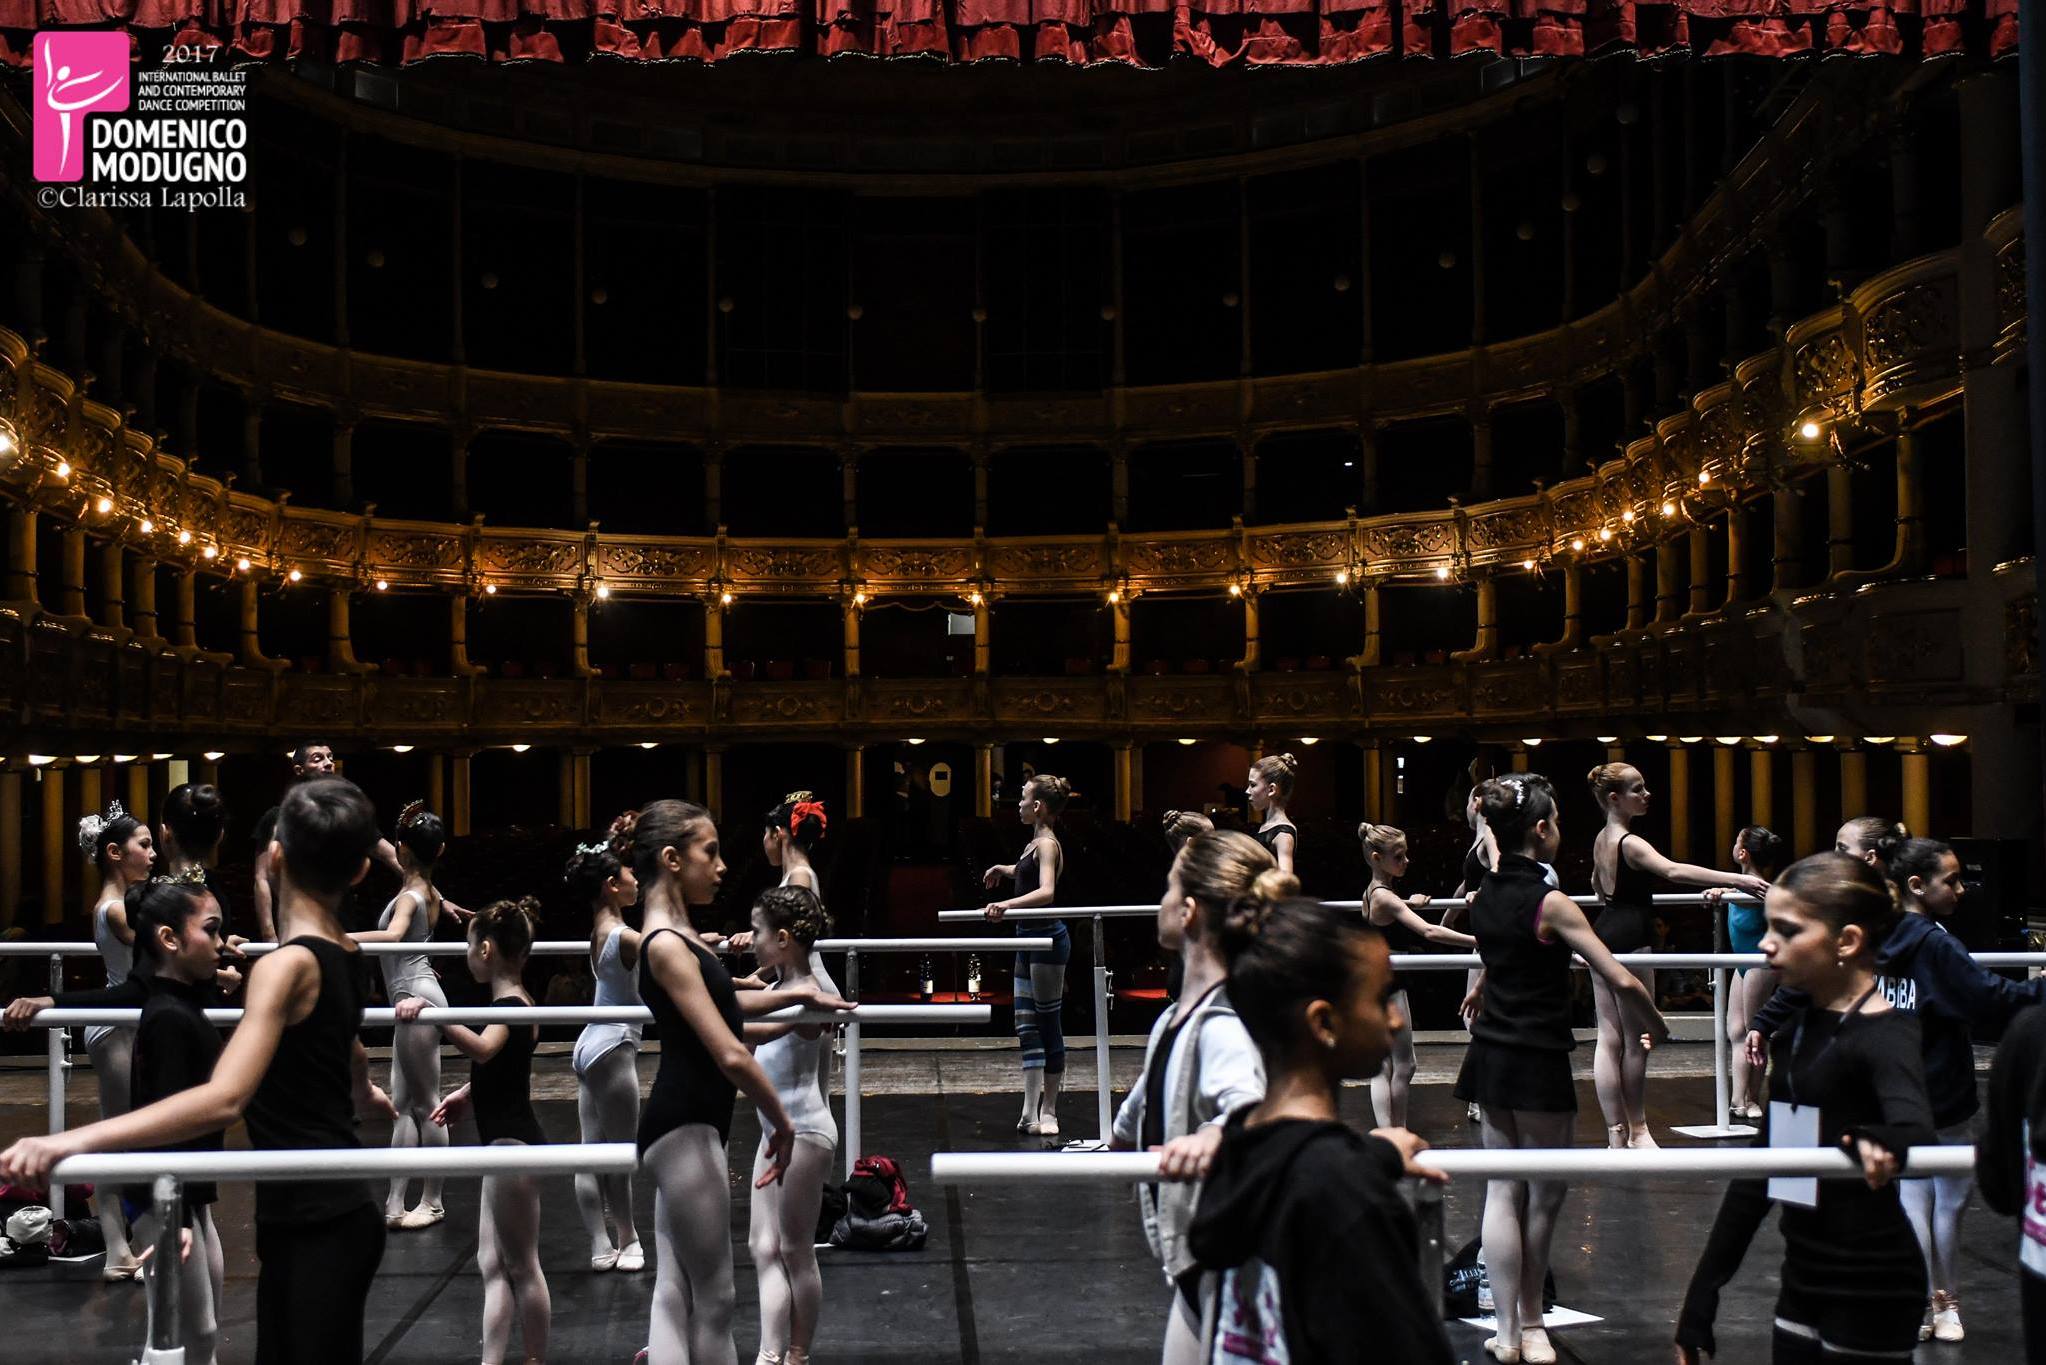 International Ballet and Contemporary Dance Competition "Domenico Modugno"